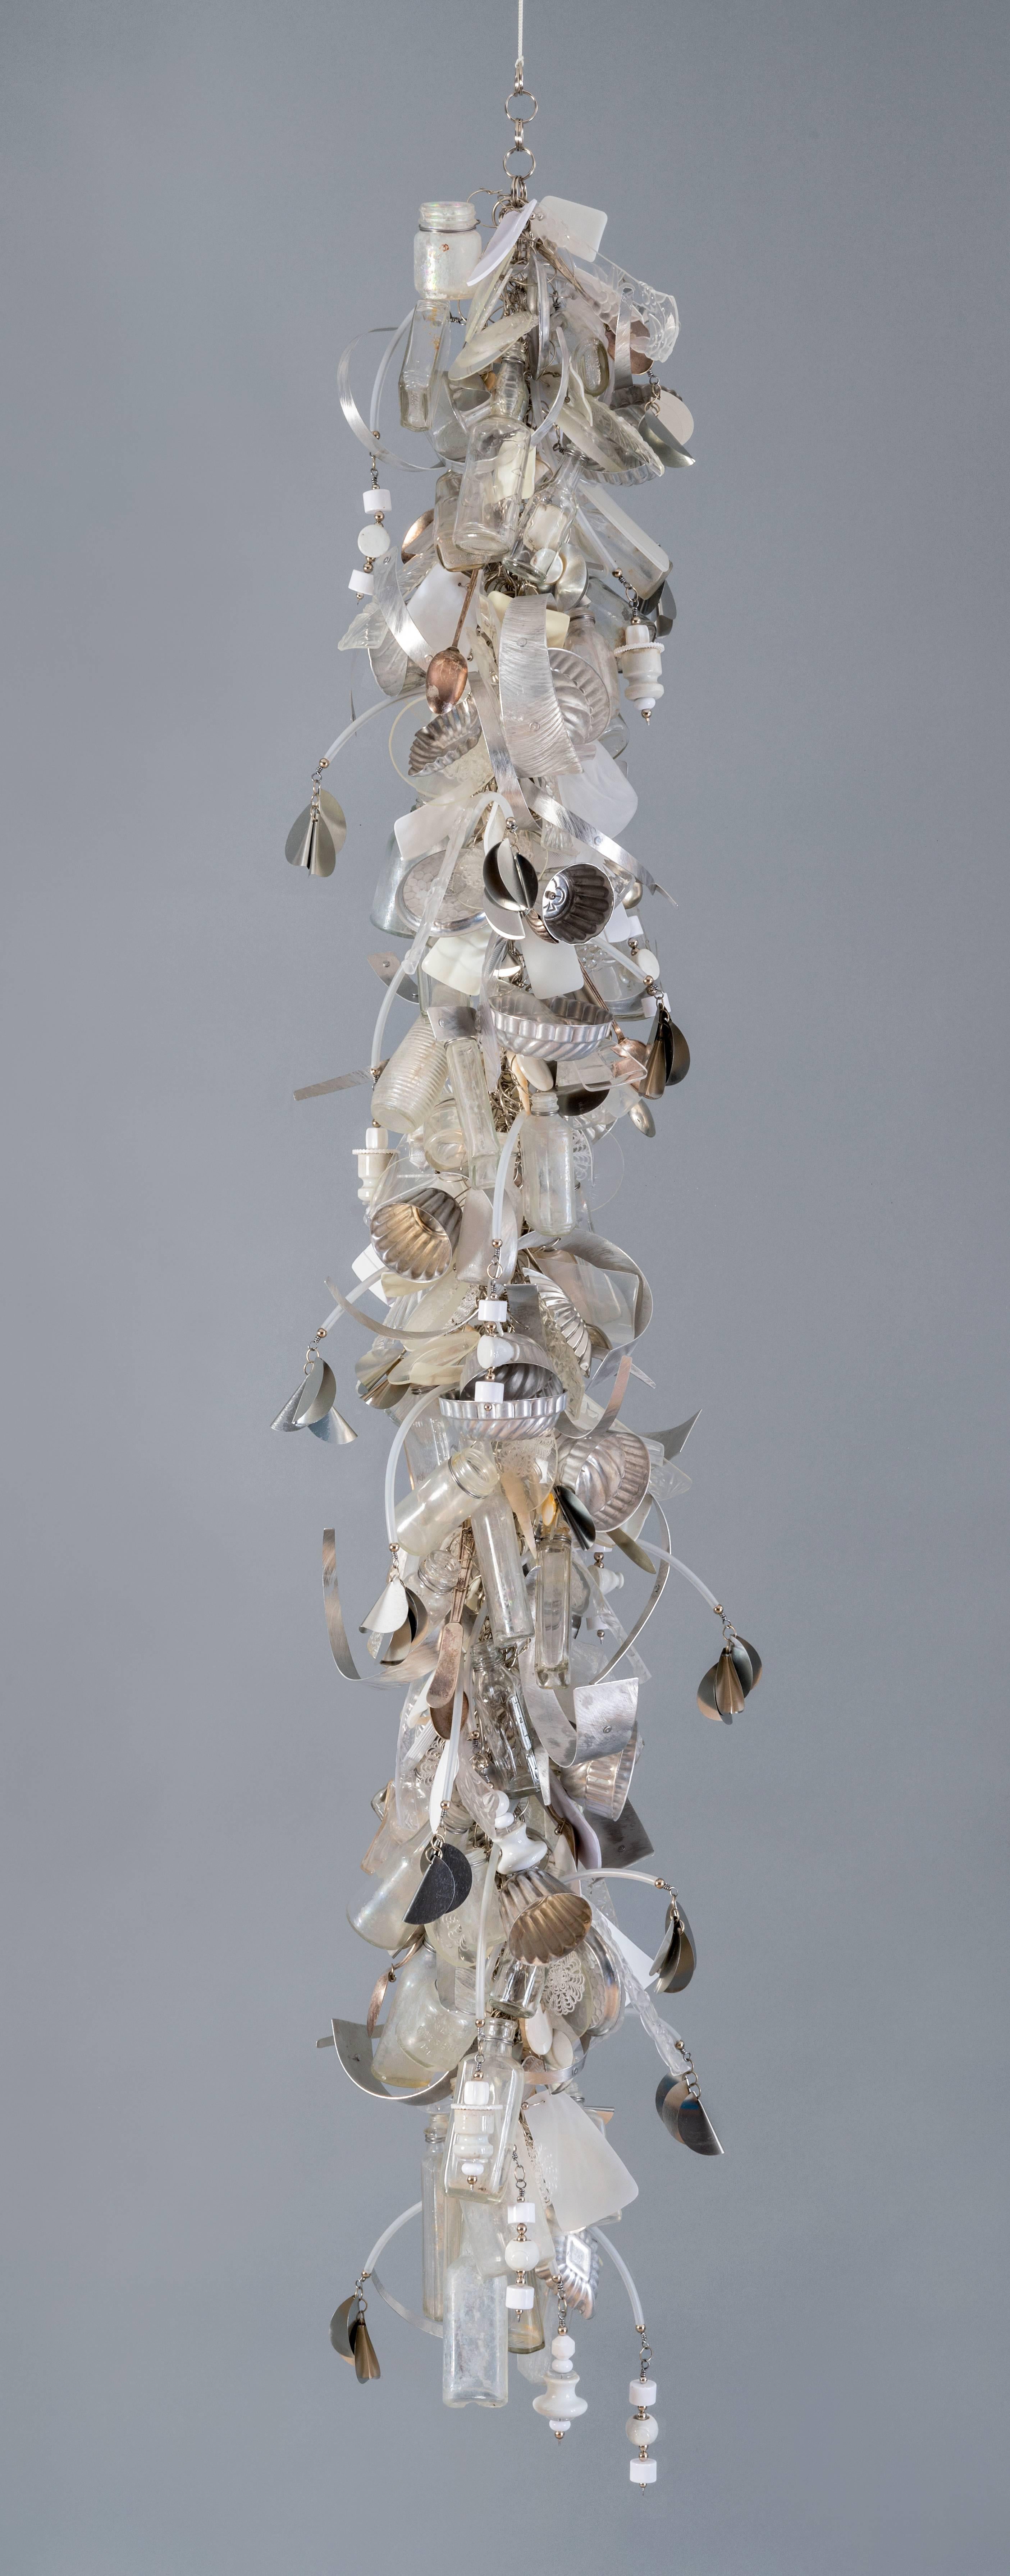 "Innocence", Contemporary, Mixed Media, Hanging Sculpture, Metal, Plastic, Glass